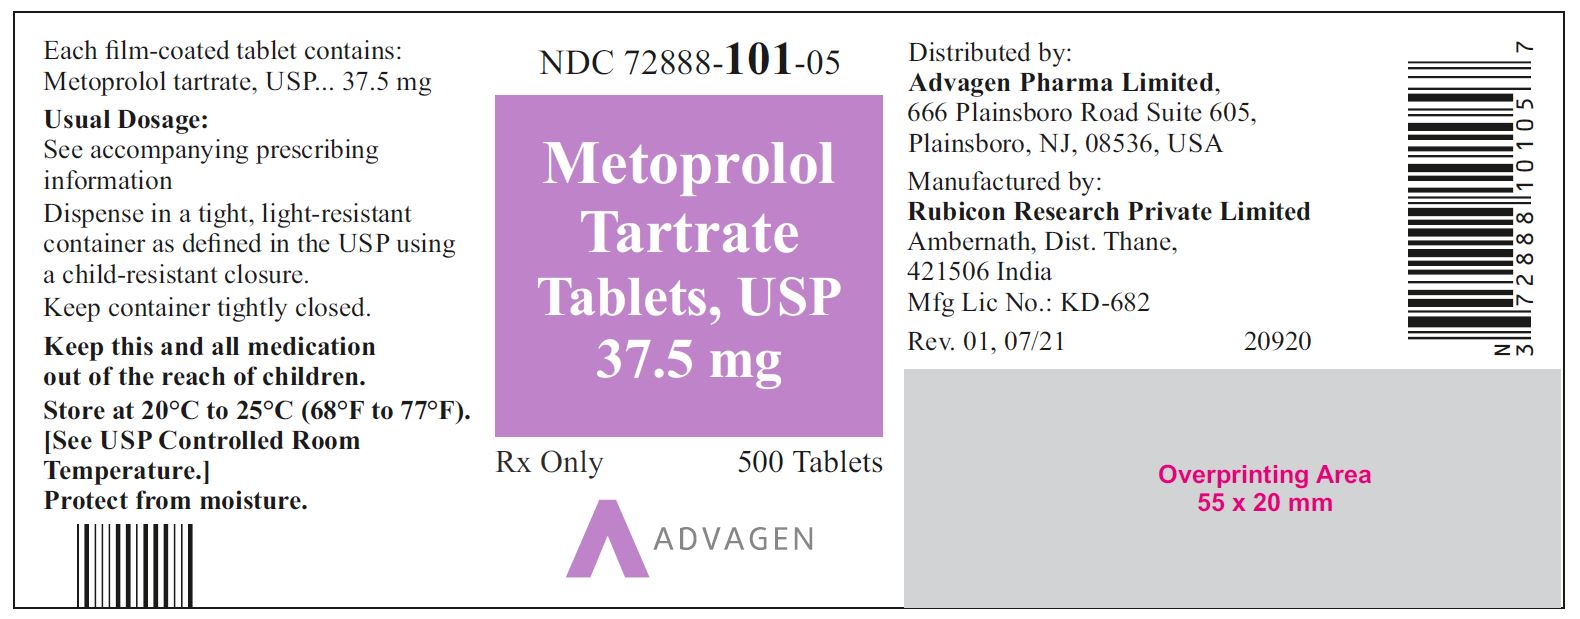 NDC 72888-101-05 - Metoprolol Tartrate Tablets, USP 37.5 mg - 500 Tablets